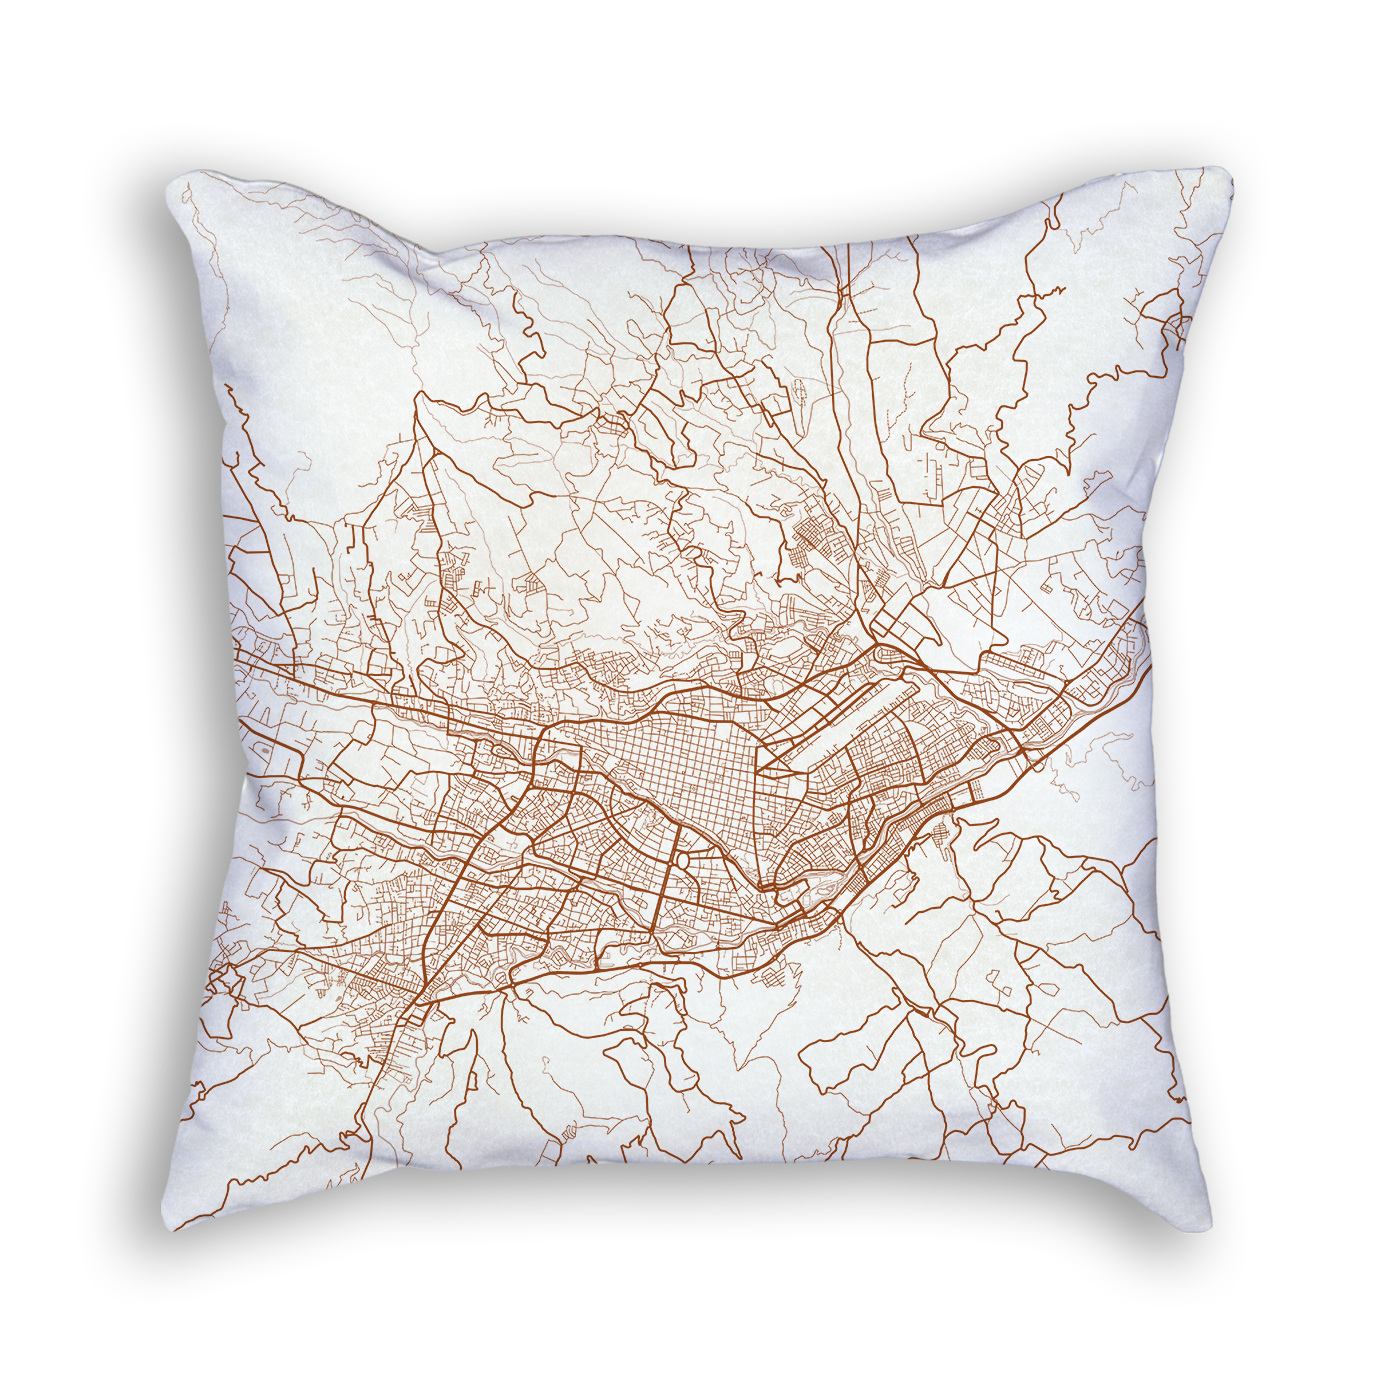 Cuenca Ecuador City Map Art Decorative Throw Pillow